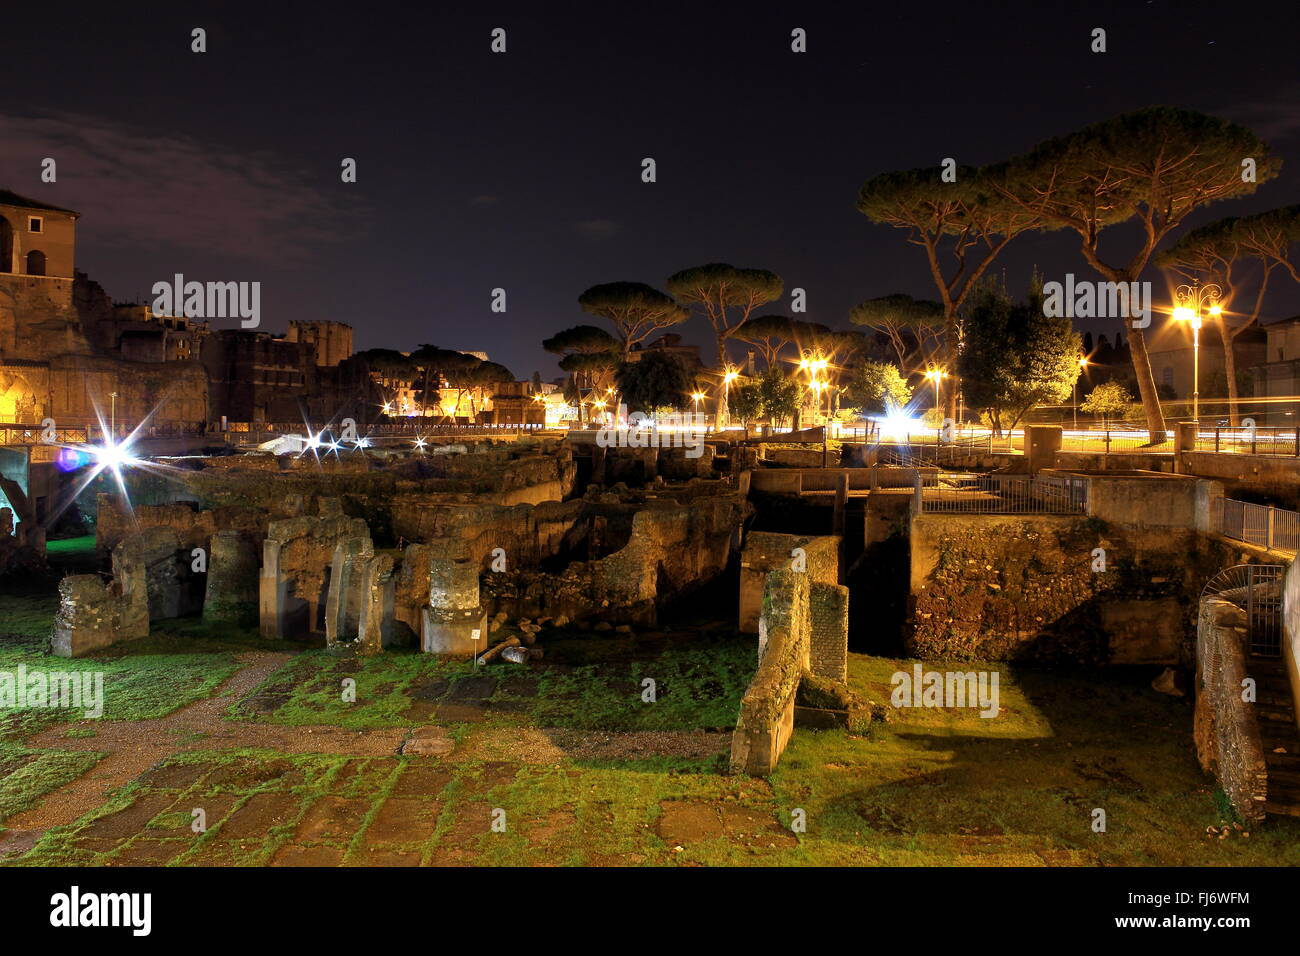 Foro Traiano in Rome, Italy - night scene Stock Photo